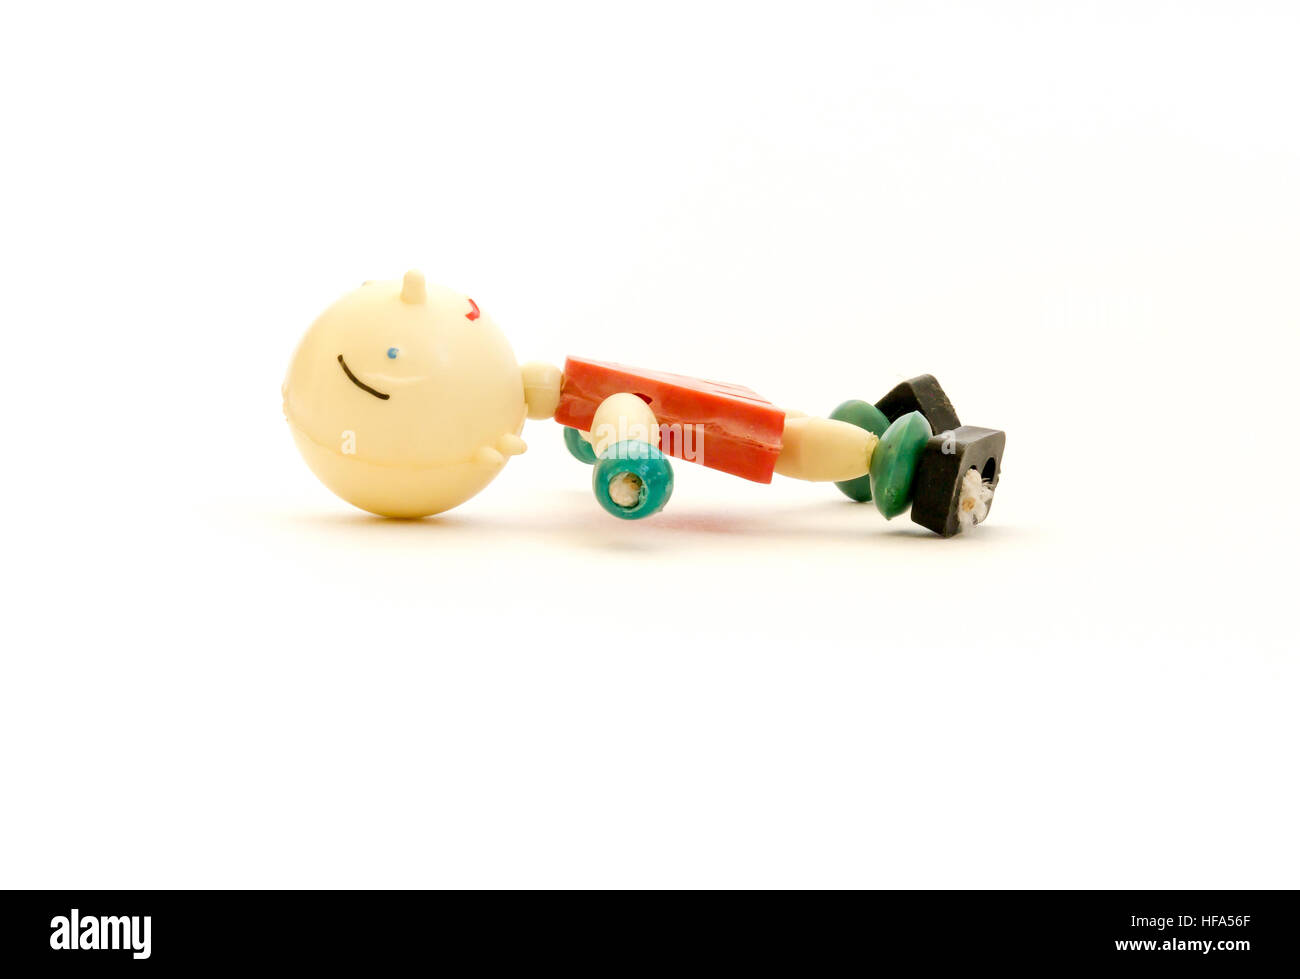 The Miniature mechanic isolated toy Stock Photo - Alamy